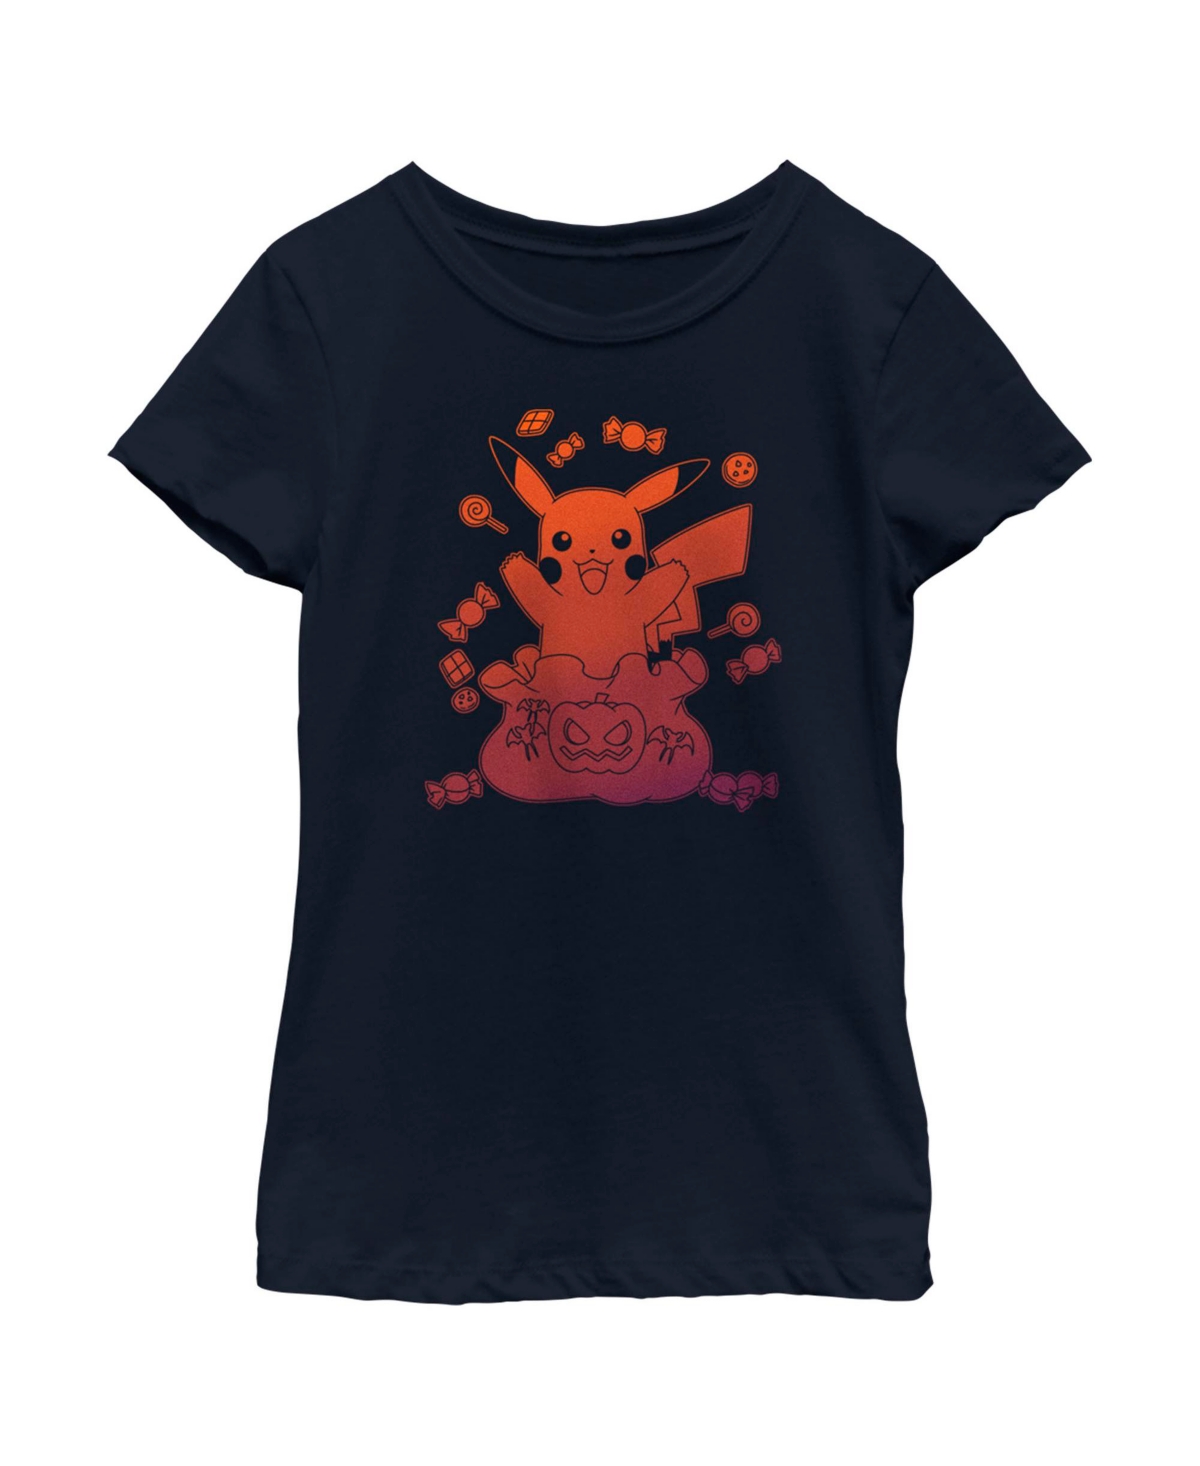 Girl's Pokemon Miraidon Portrait T-Shirt - Light Pink - Large